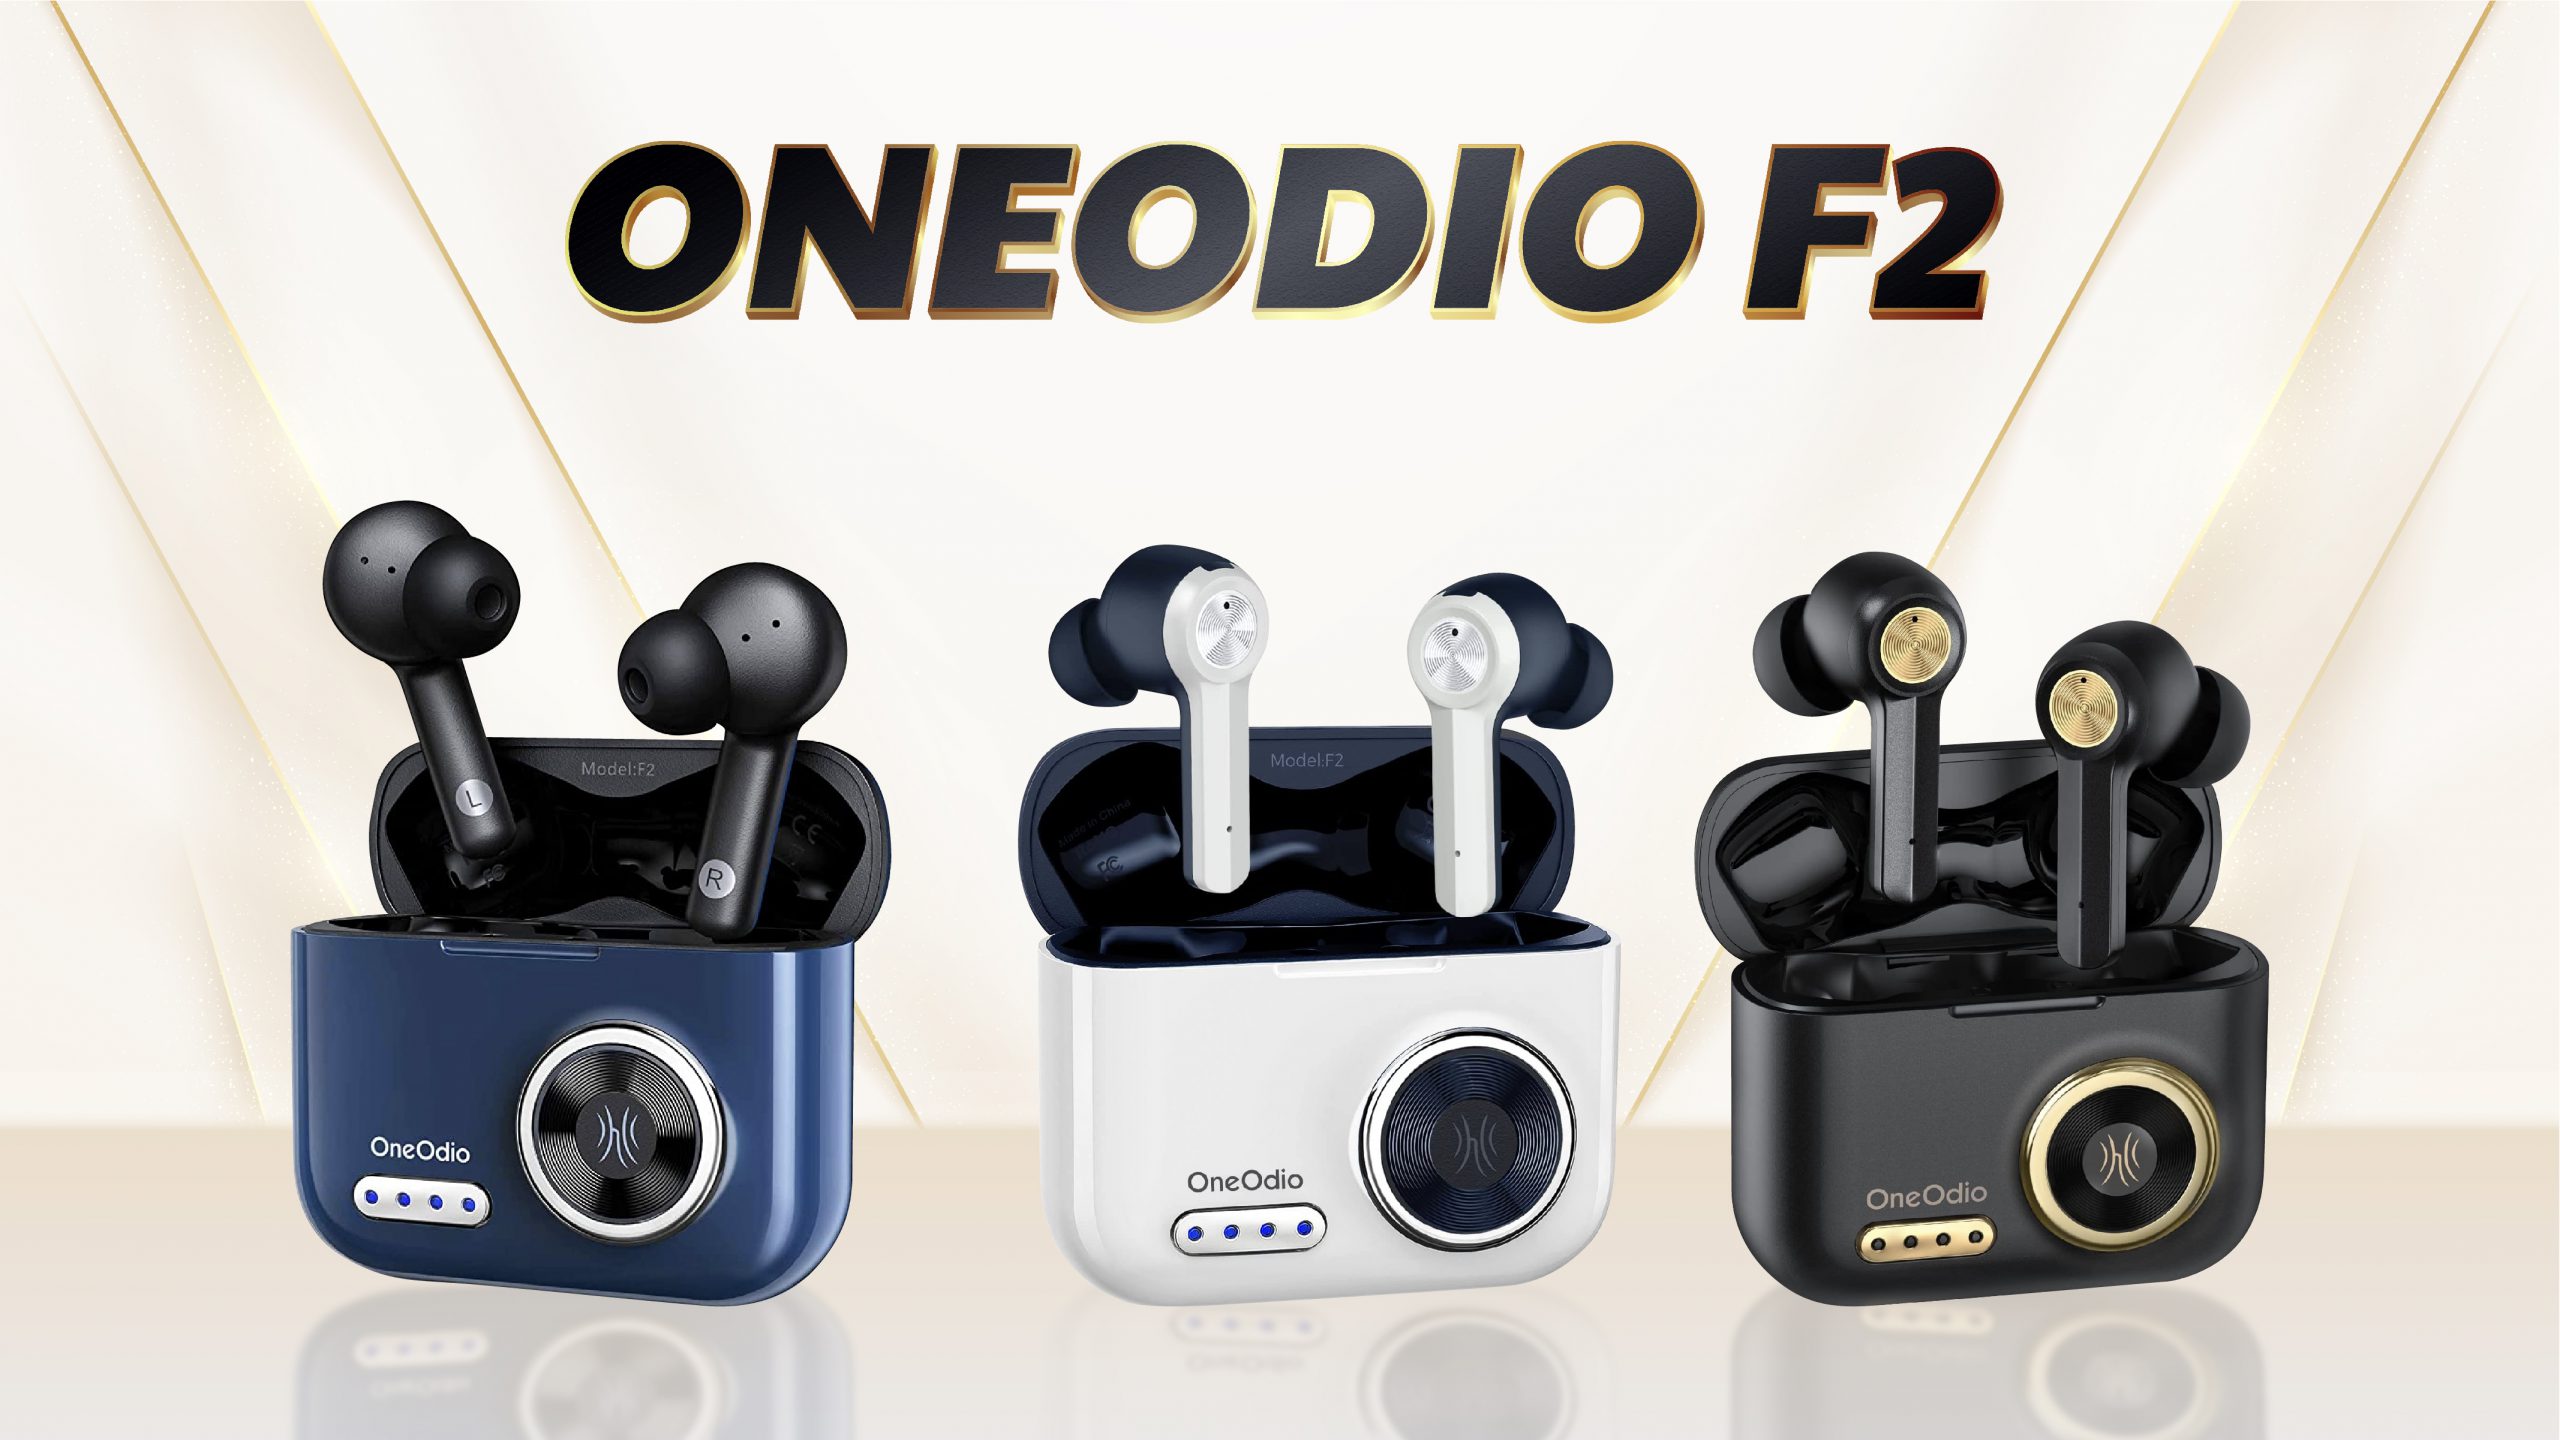 OneOdio F2